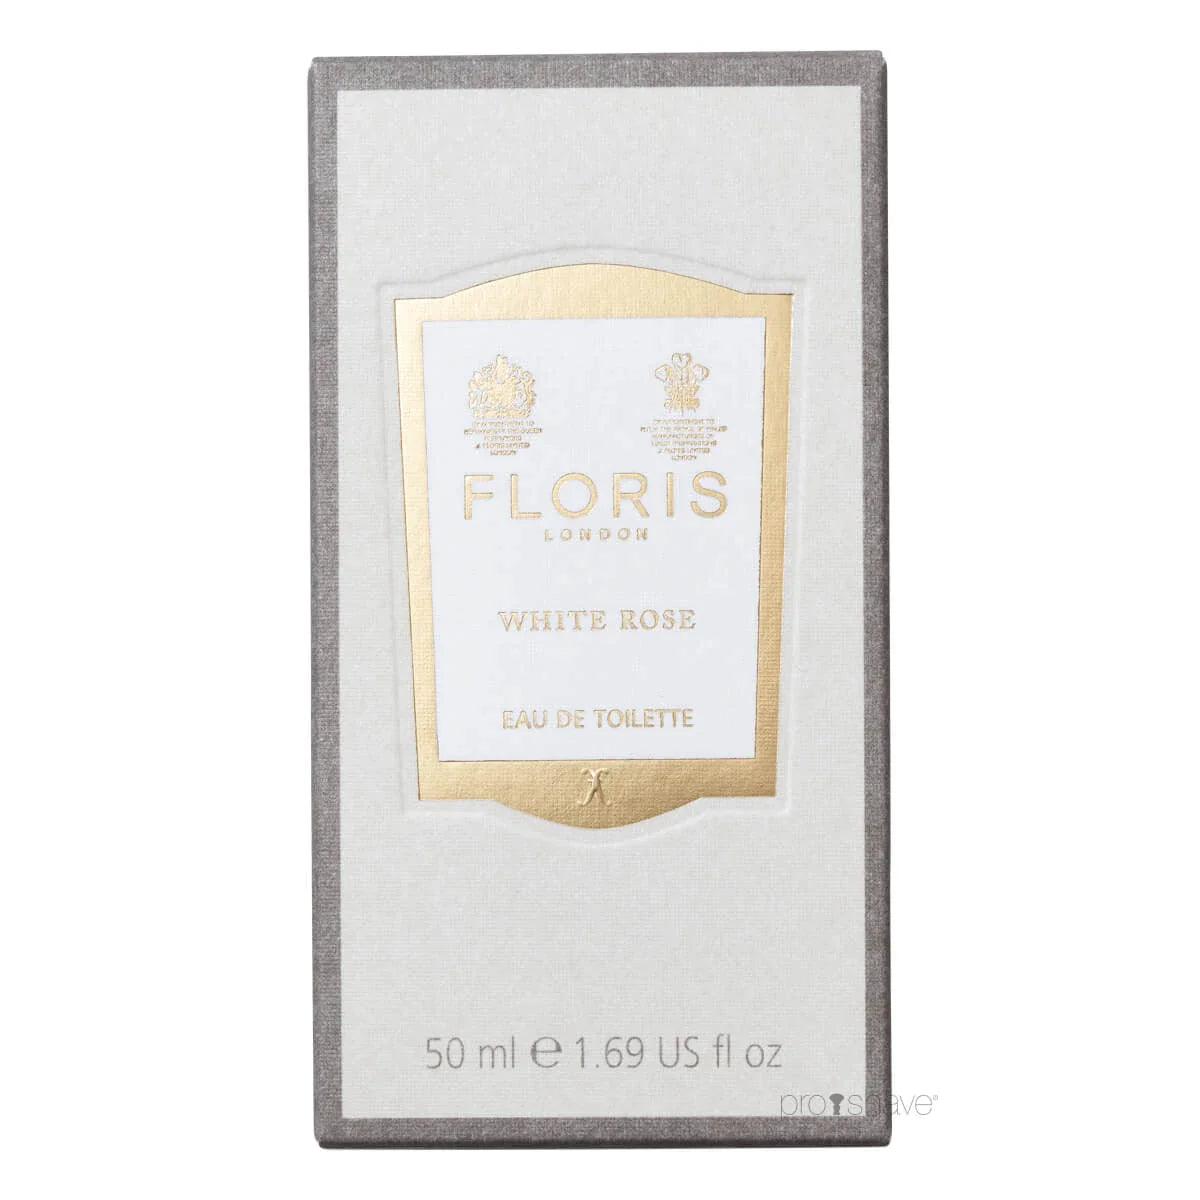 Floris White Rose, Eau de Toilette, 50 ml | Parfyme | Floris London | JK SHOP | JK Barber og herre frisør | Lavepriser | Best